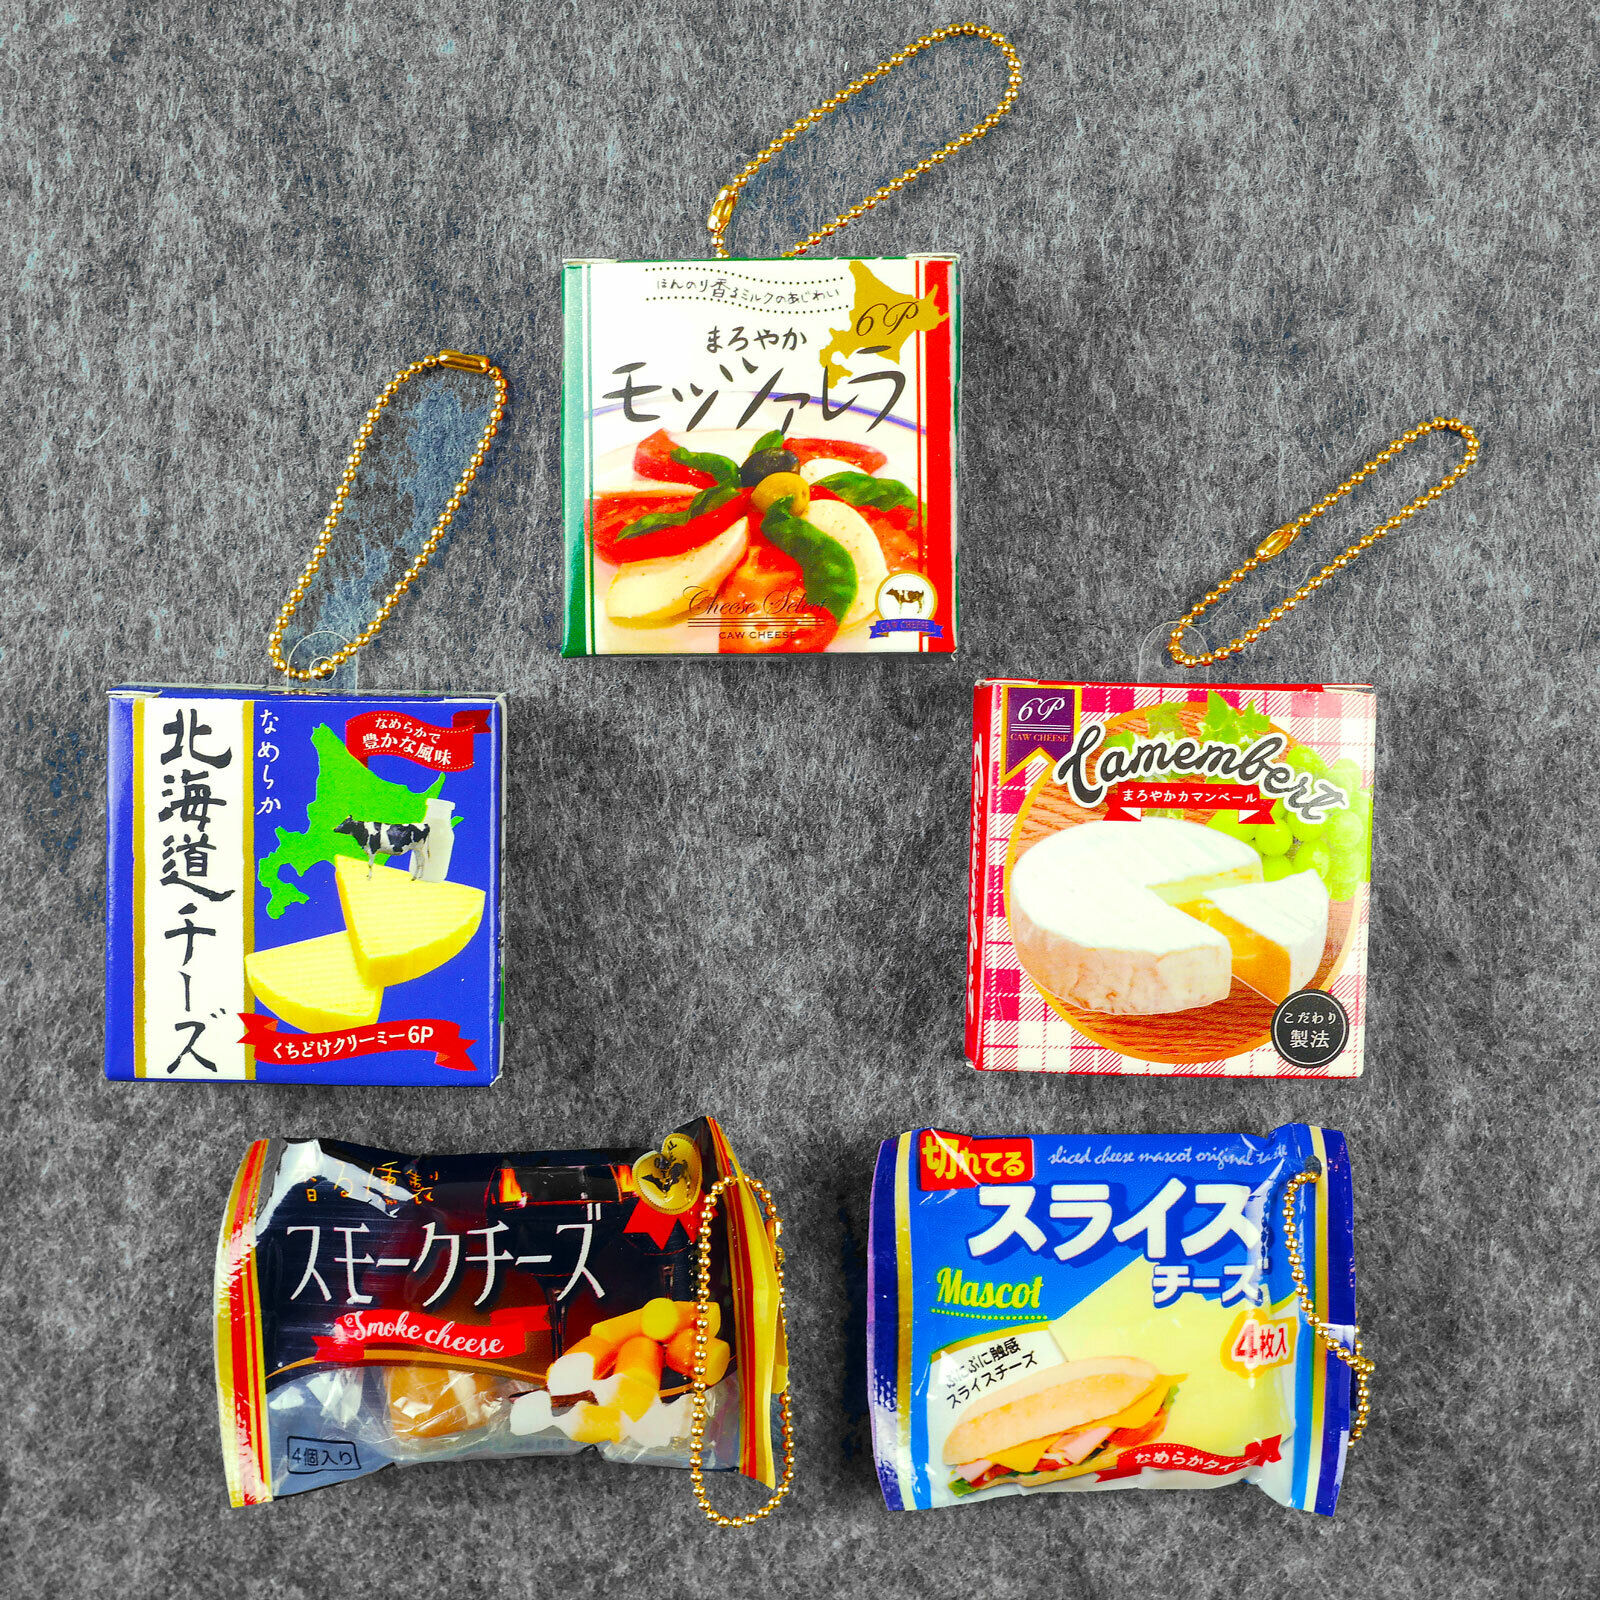 Kawaii Japanese Food Keychain Squishy Charm Miniature Cheese 1 Random Figure  